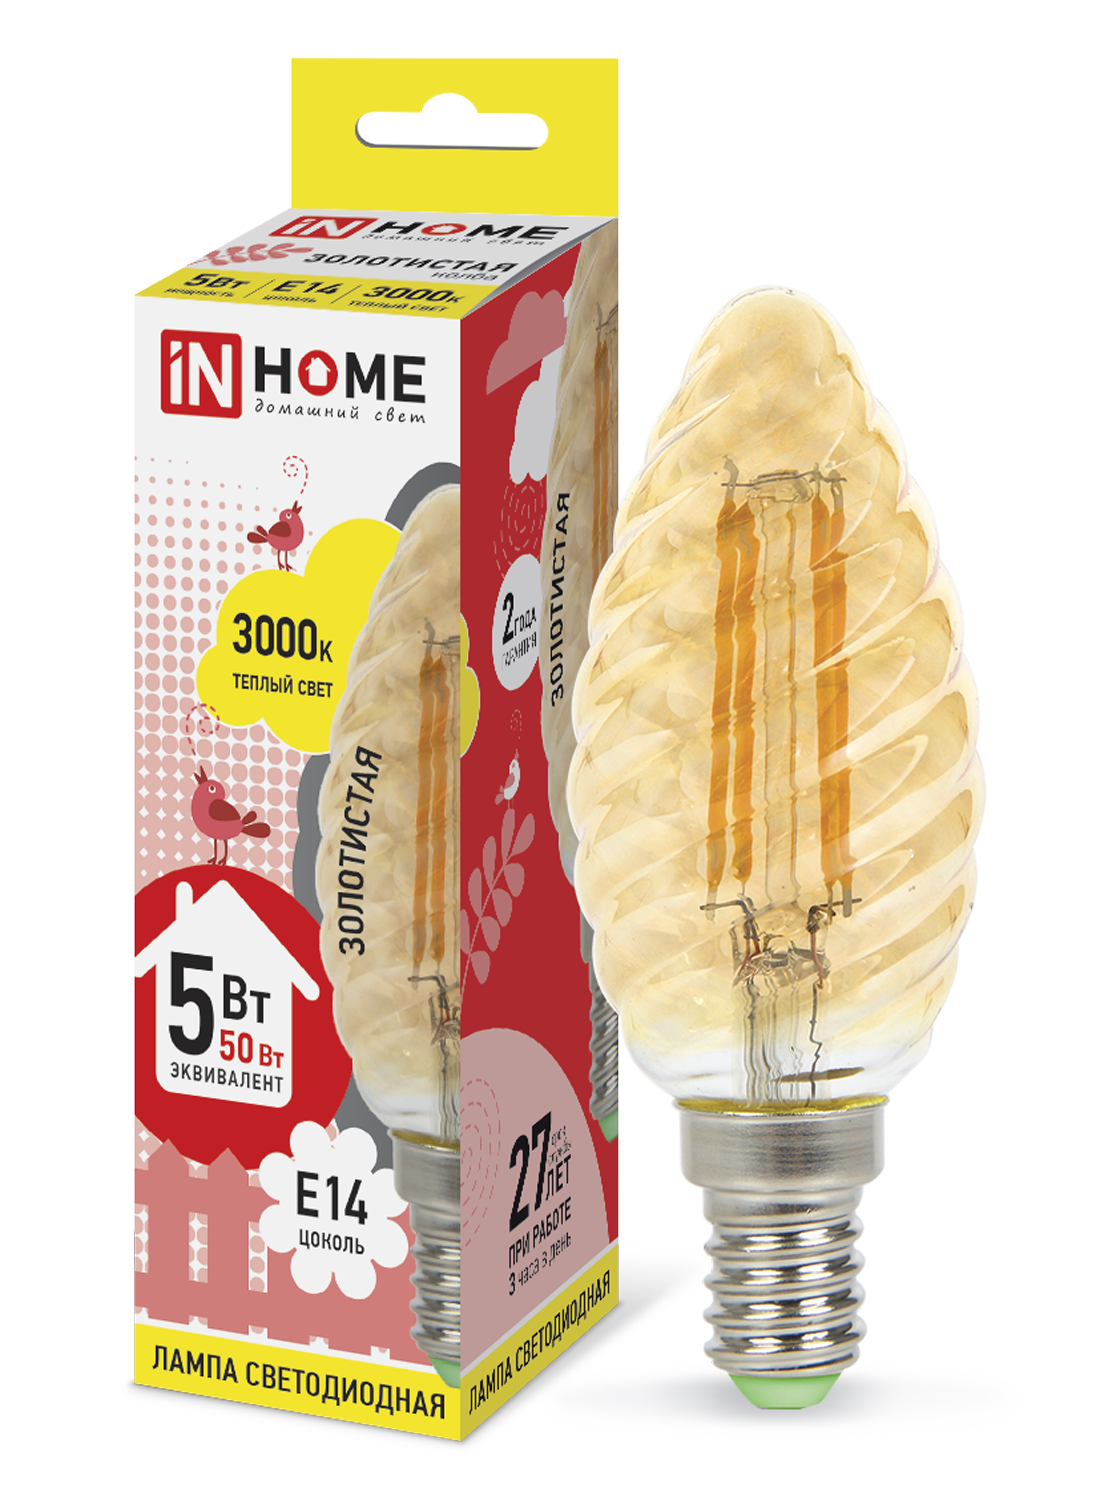 Купить лампа светодиодная led-свеча витая-deco 5вт 230в е14 3000к 450лм золотистая in home, 100% качество, в наличии на L-ed.ru